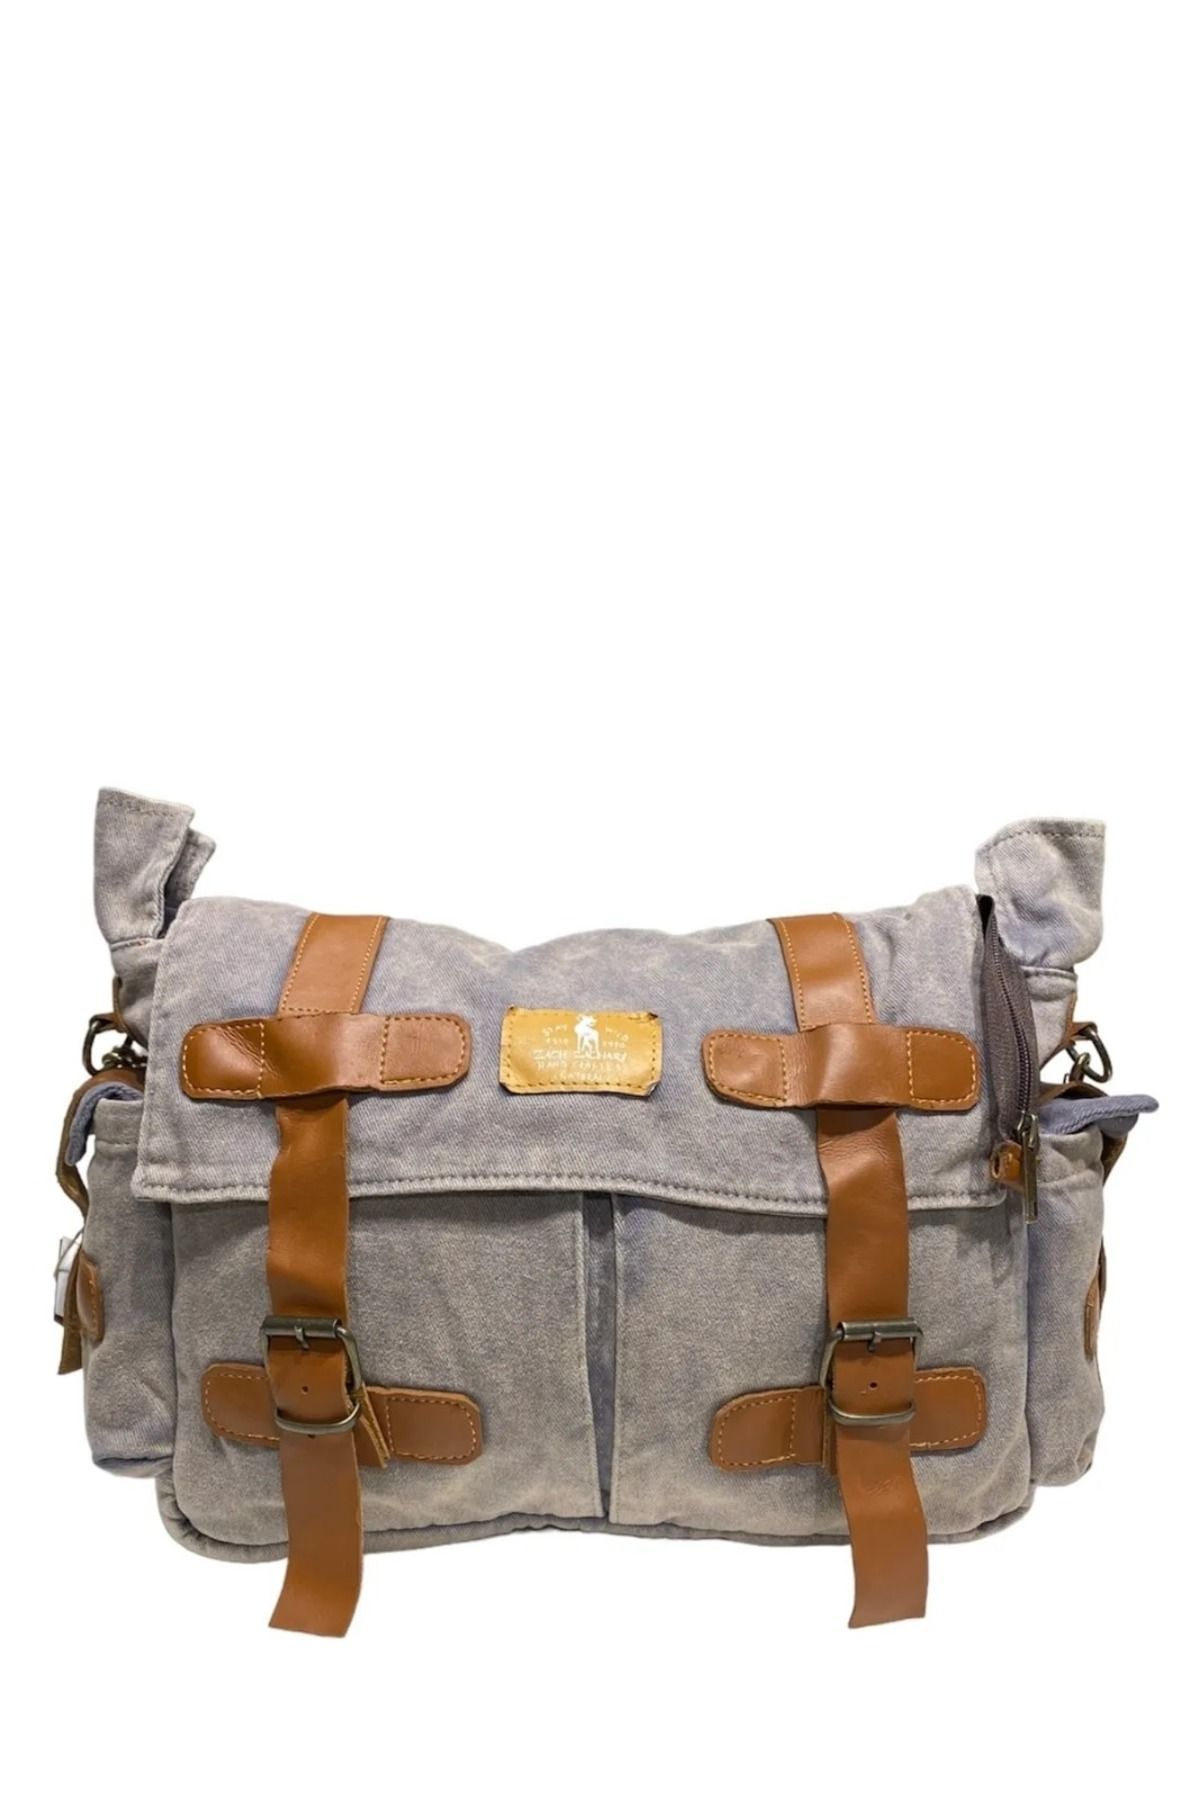 Mens Canvas Messengers Shoulder School Bags Casual Vintage Handbags Satchel